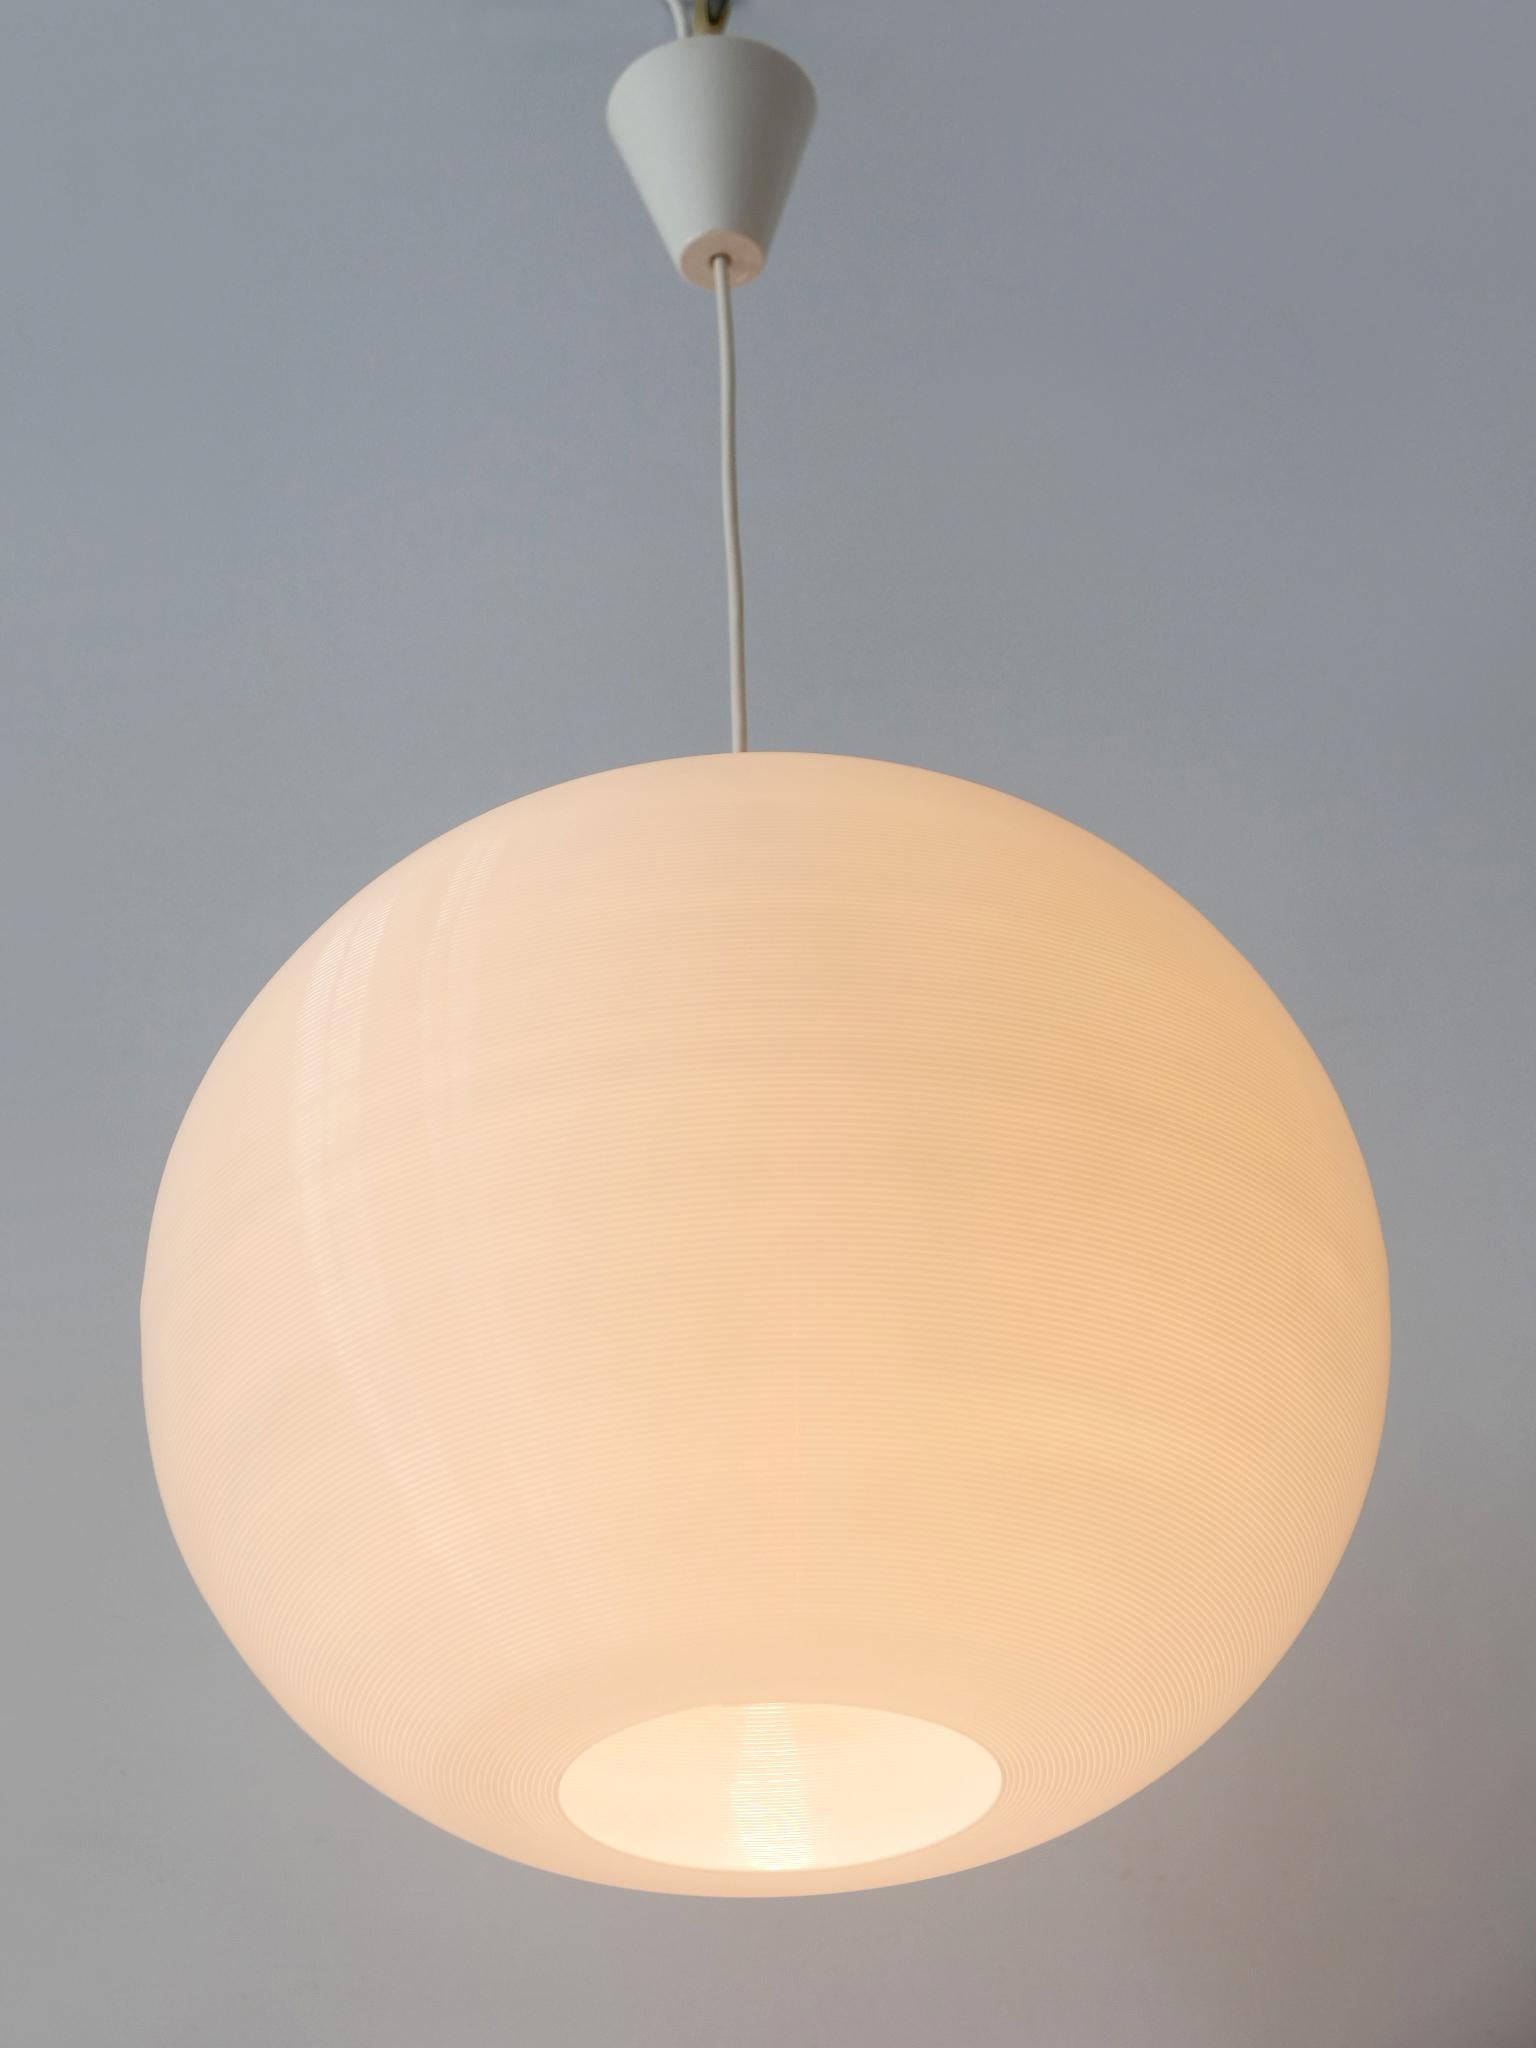 Mid-20th Century Large Mid-Century Modern Rotaflex Pendant Lamp by Yasha Heifetz USA 1960s For Sale